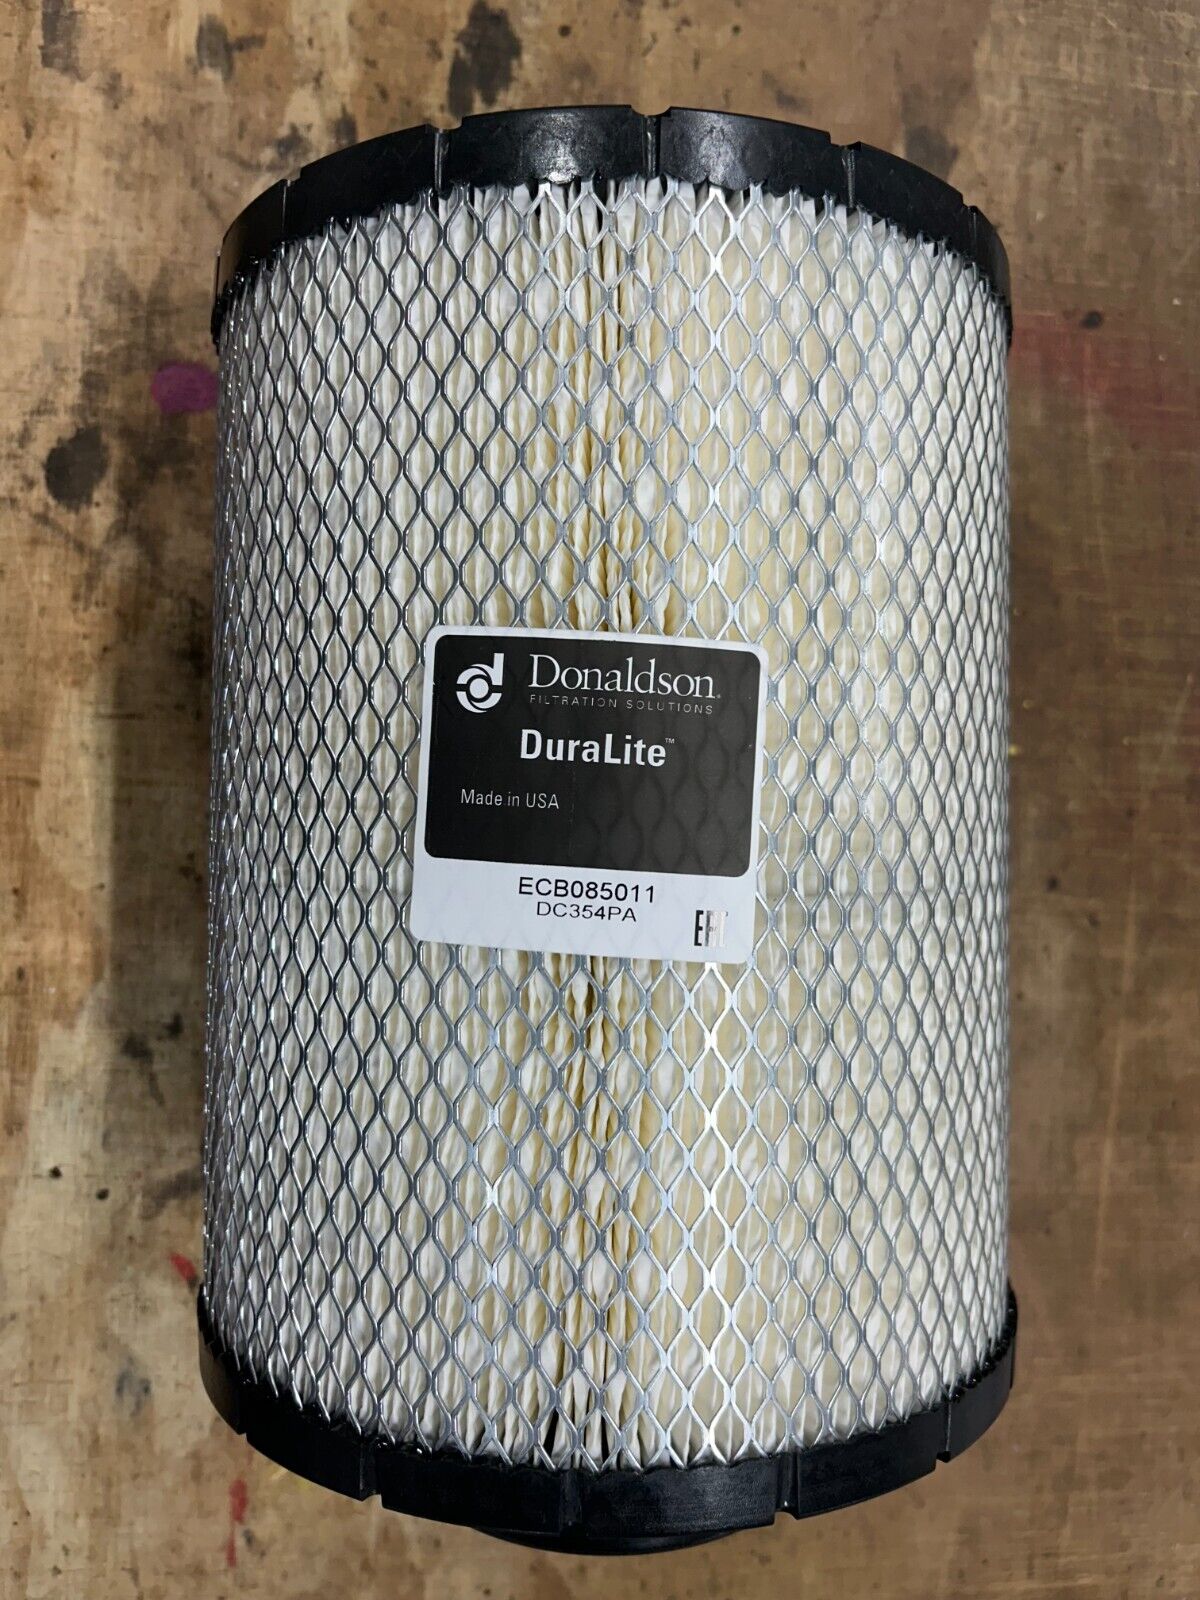 Donaldson DuraLite B085011 Air Filter Brand New